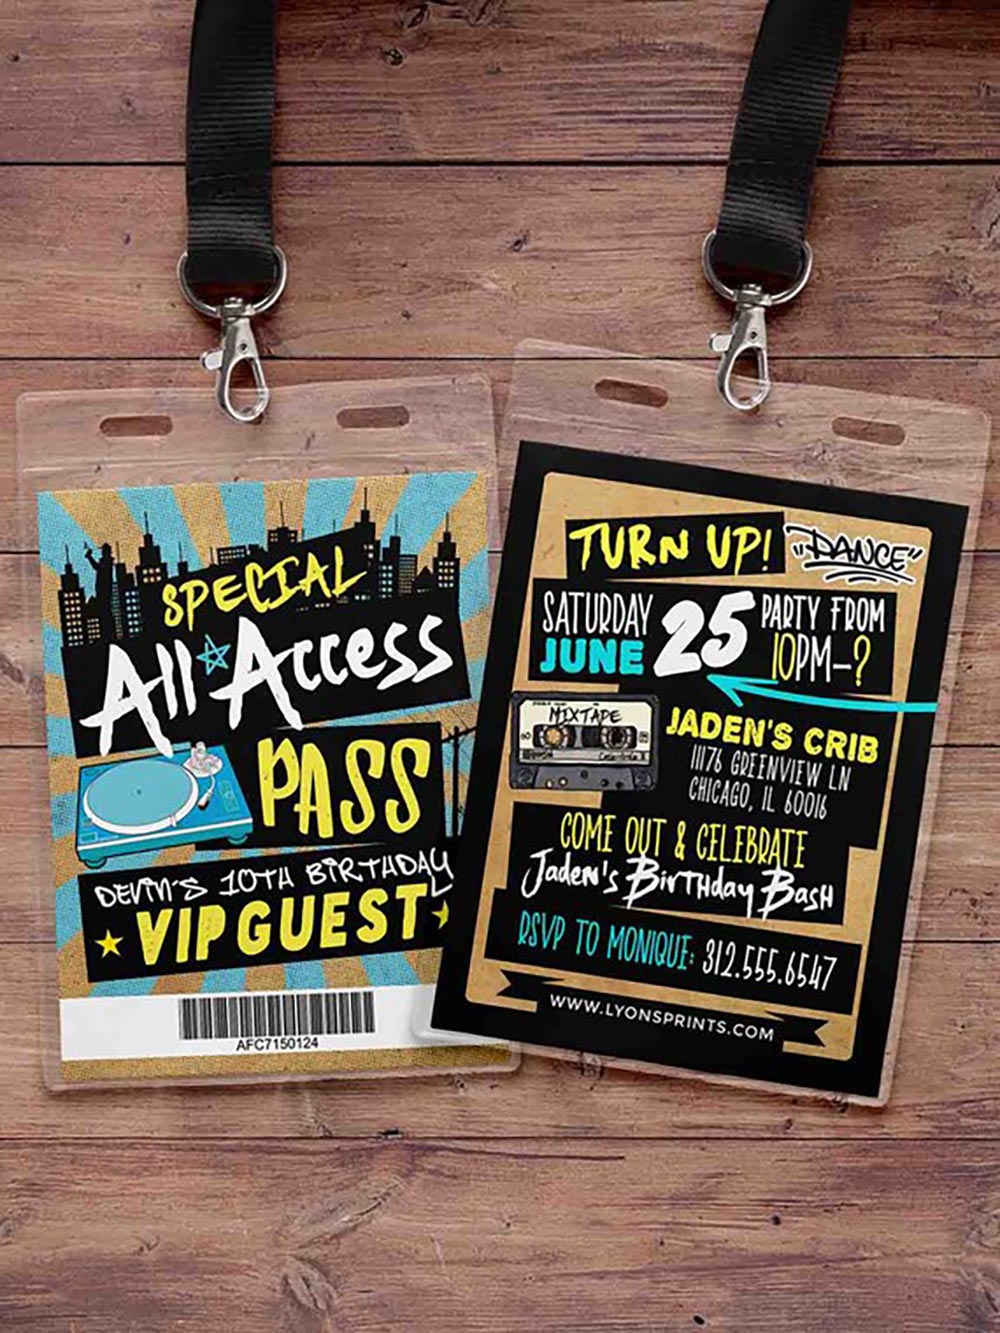 VIP Guest Passes